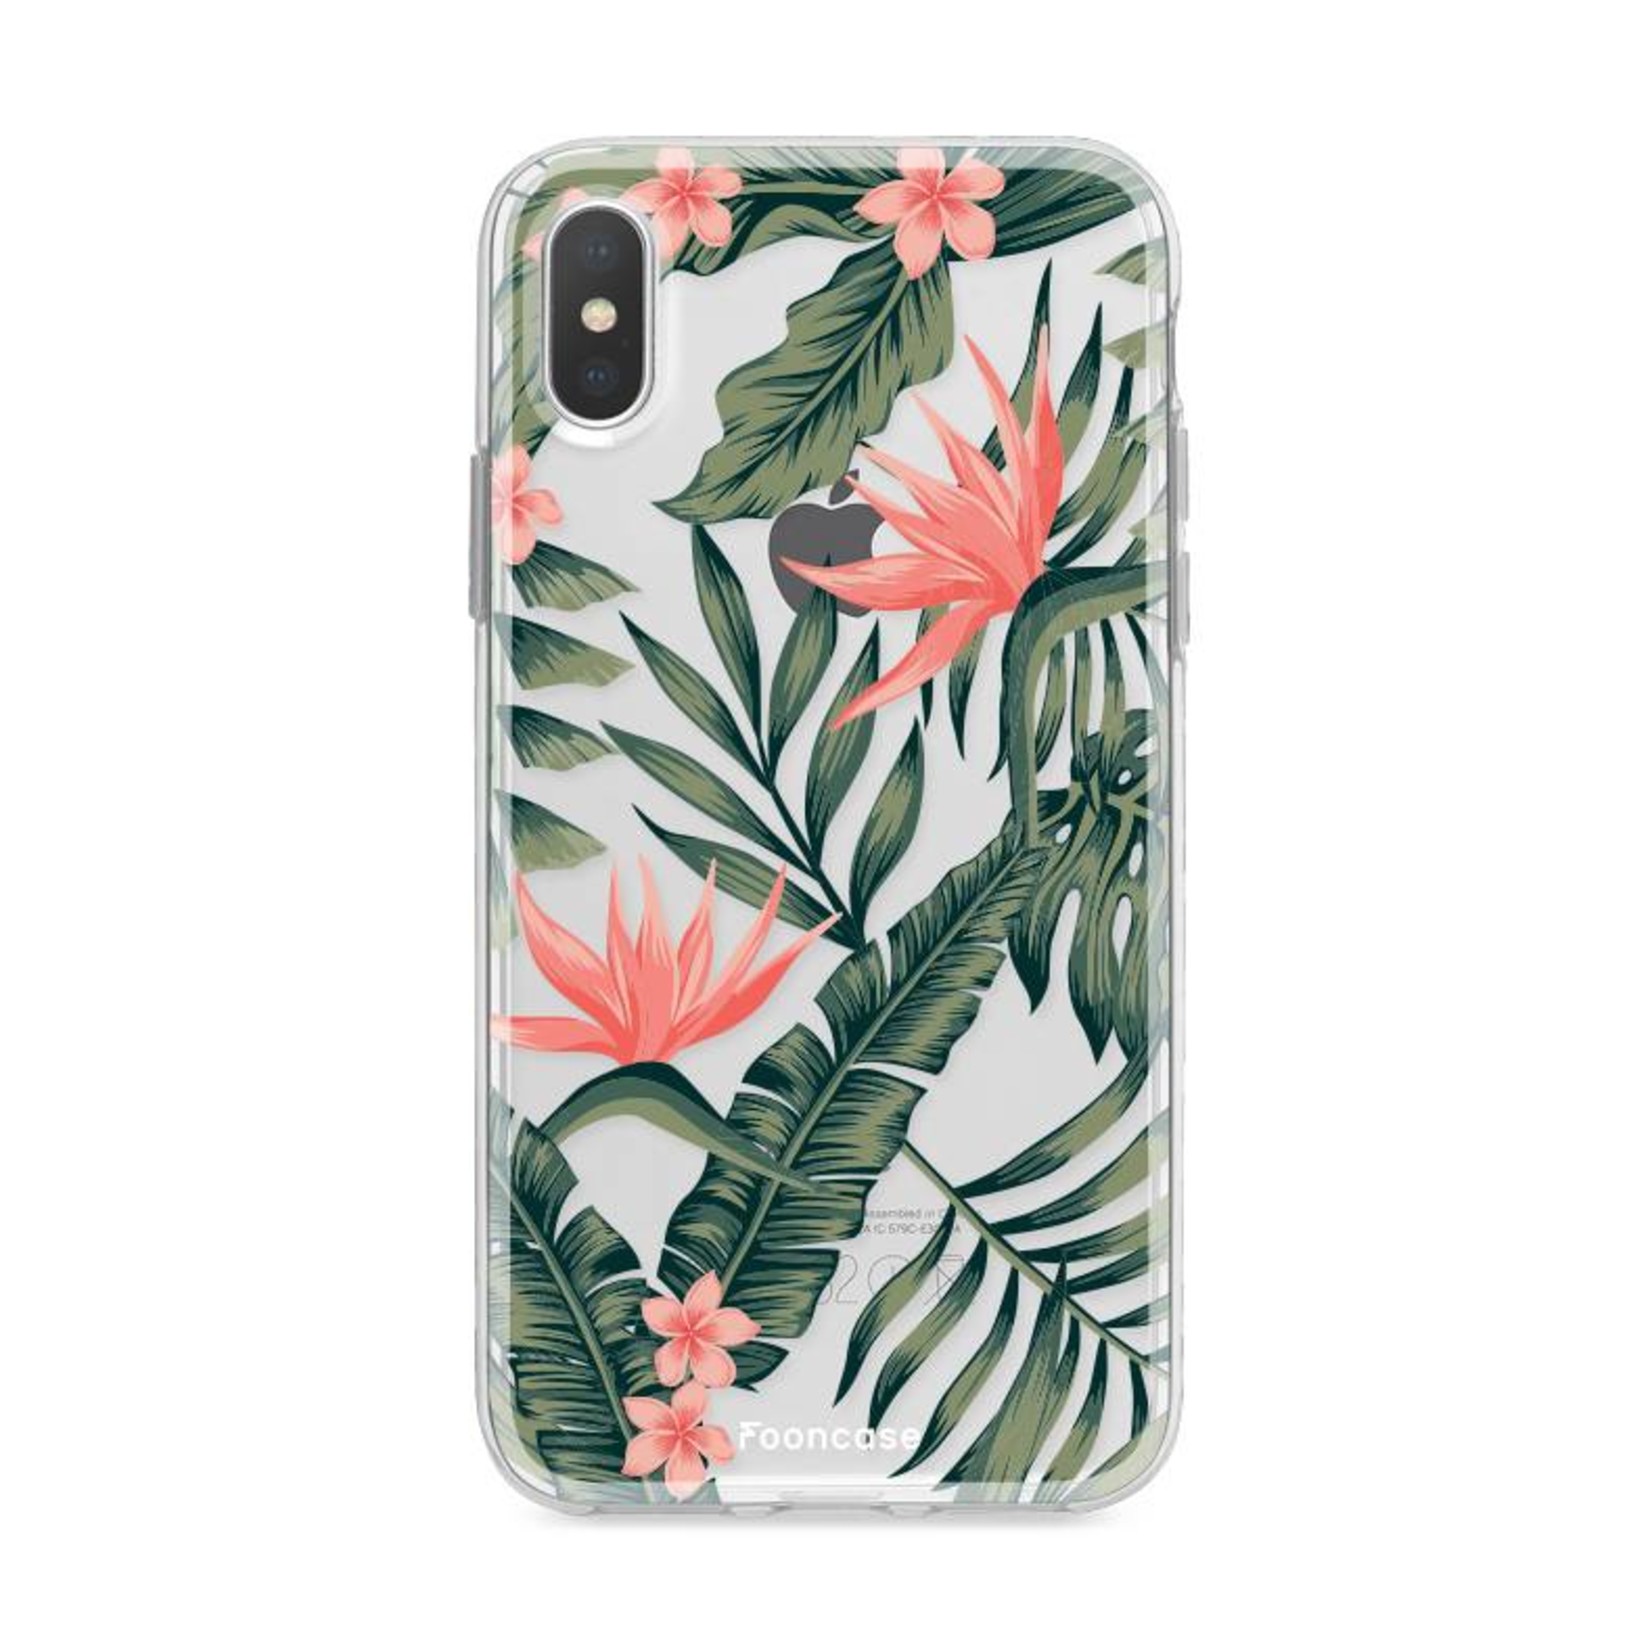 FOONCASE Iphone XS Max Phone Case - Tropical Desire